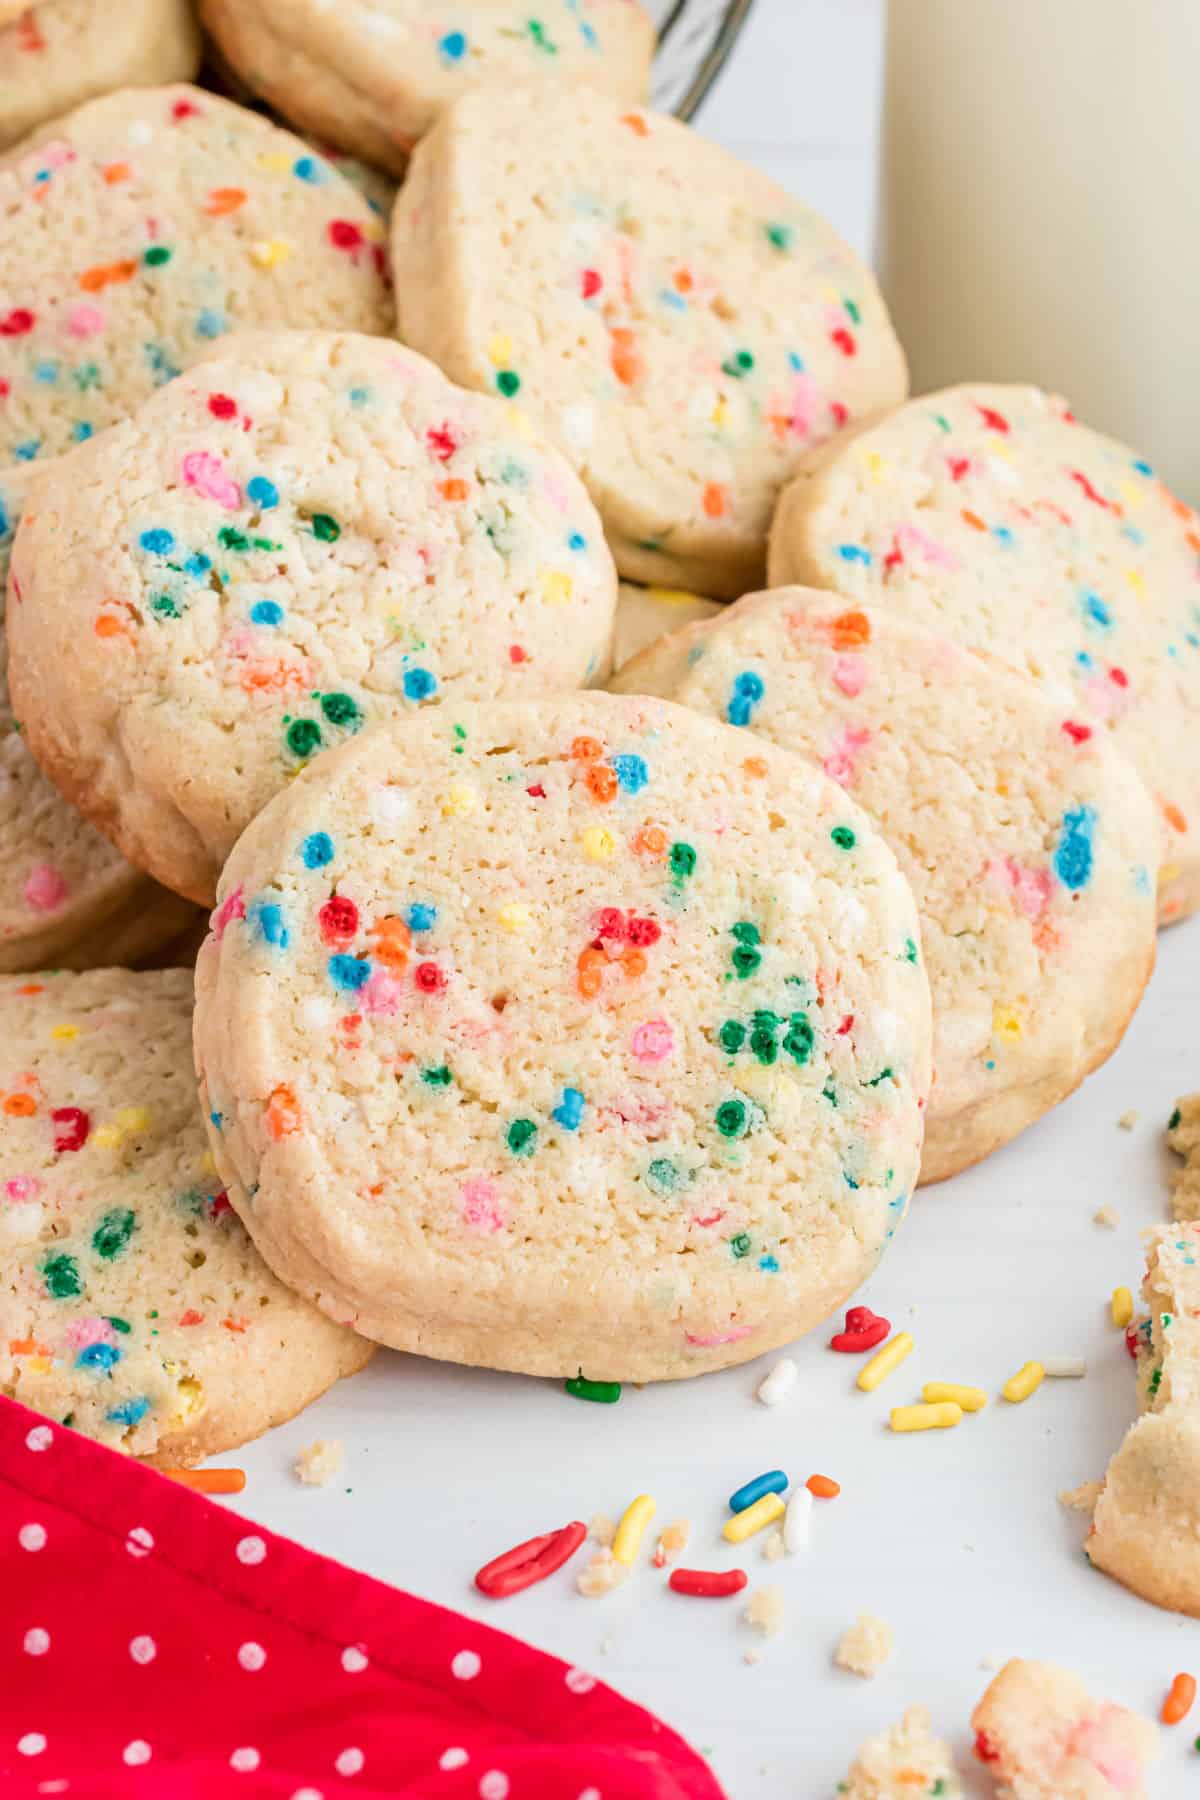 Icebox cookies with colorful sprinkles.